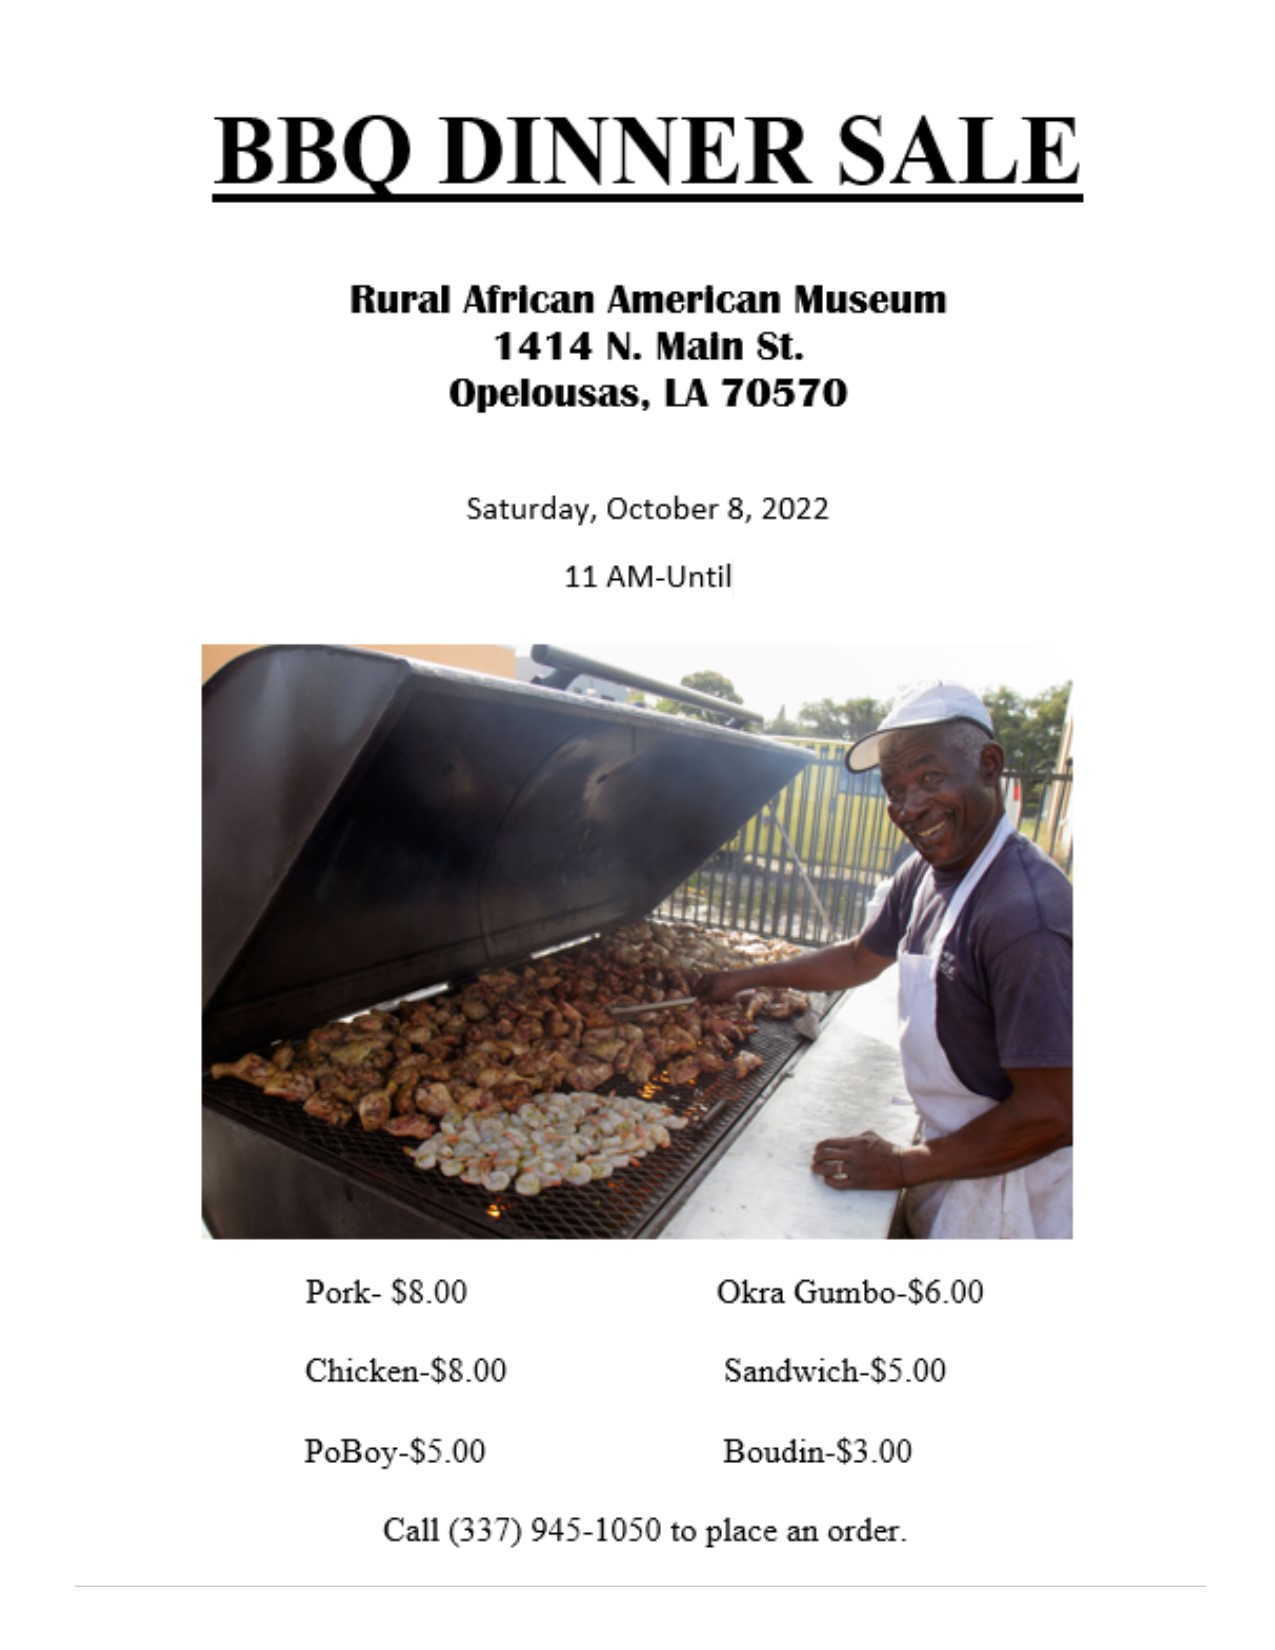 Rural African American Museum - BBQ Dinner Sale Fundraiser